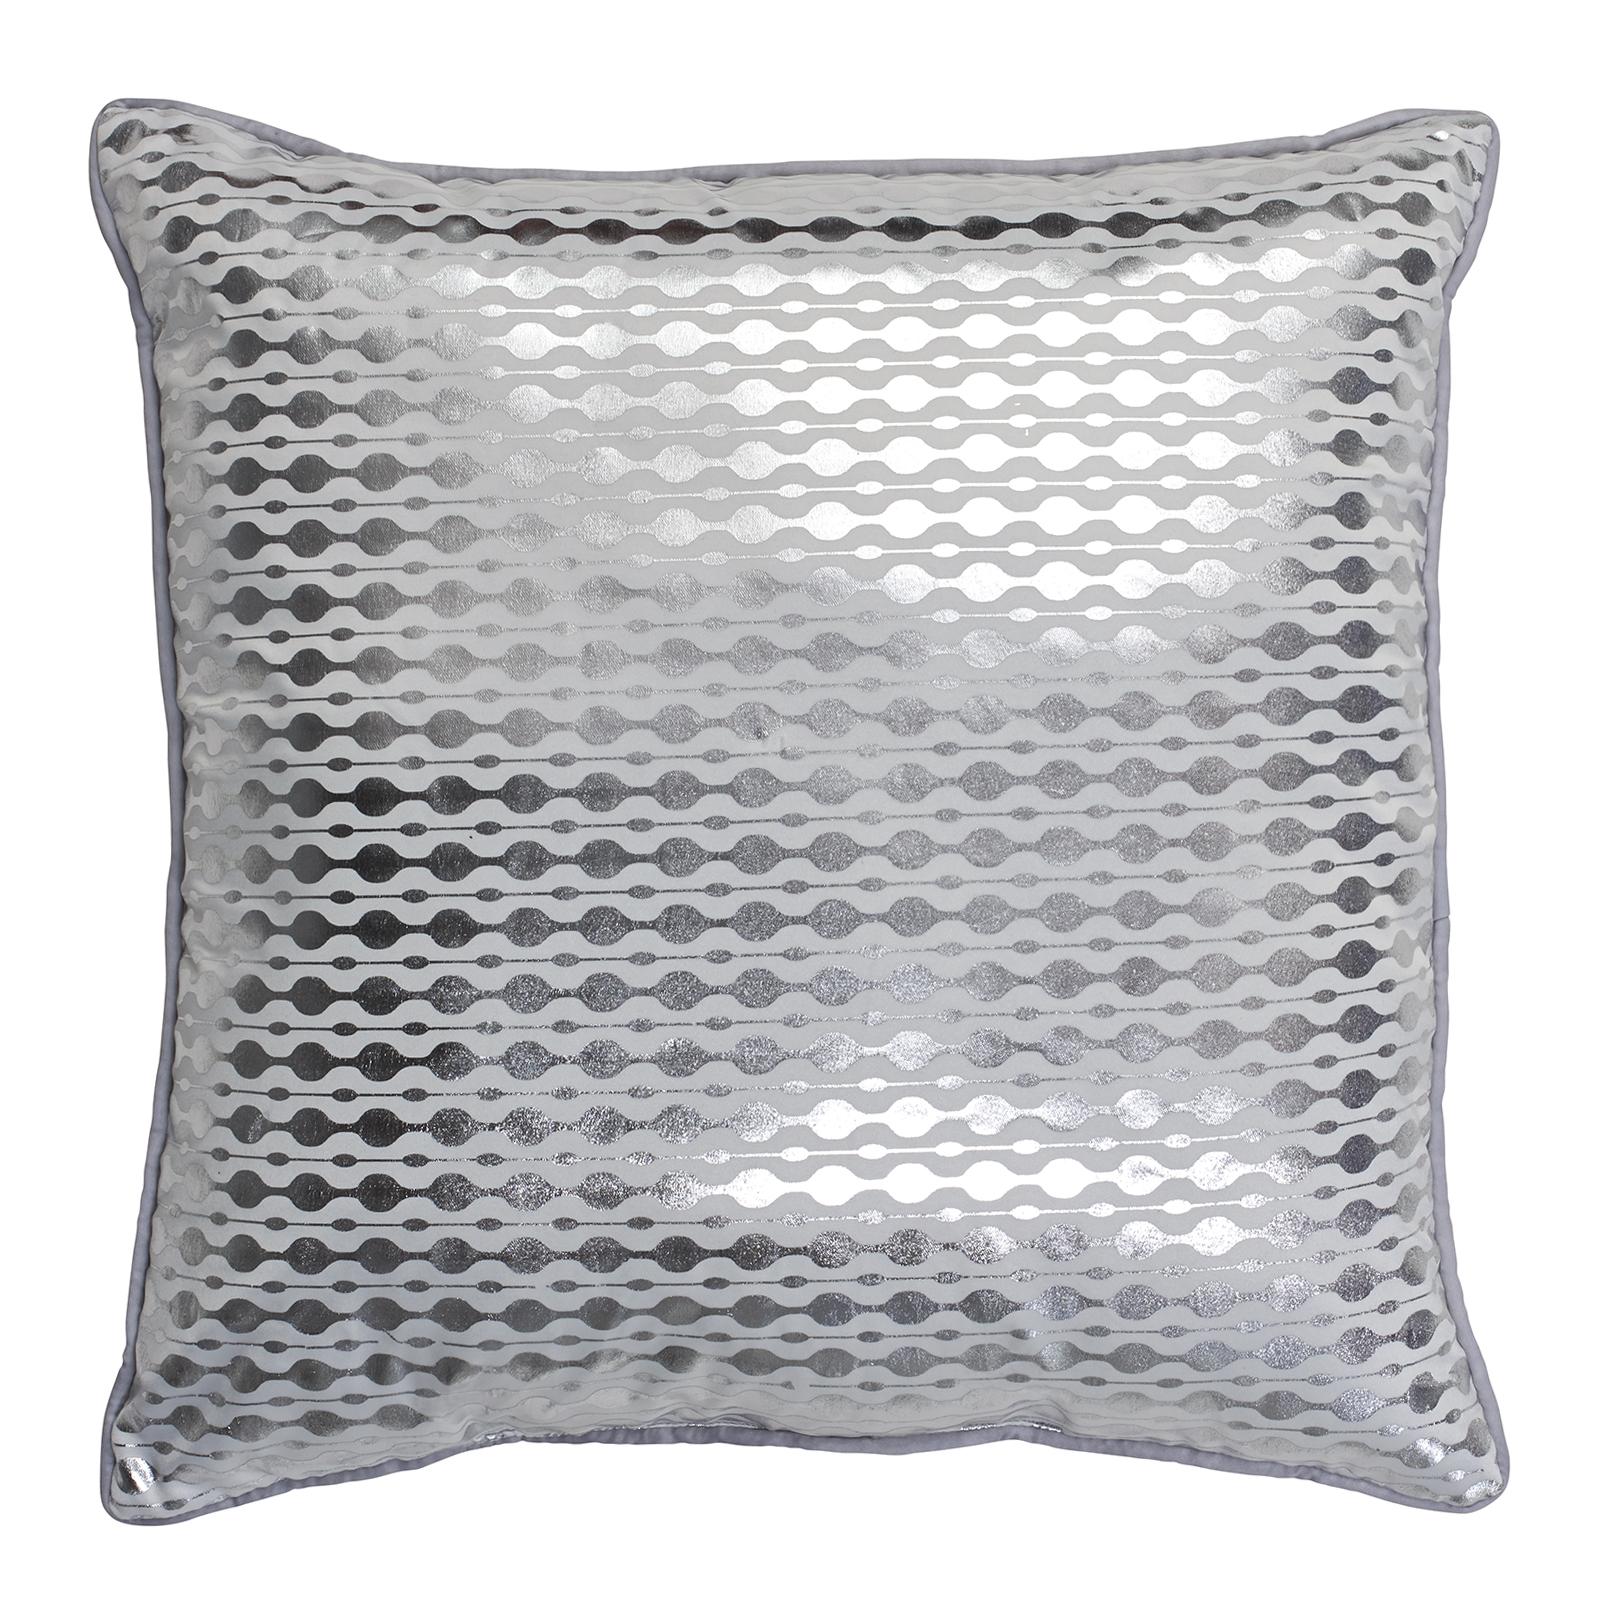 Kardashian Kollection White Hot Decorative Pillow - Metallic